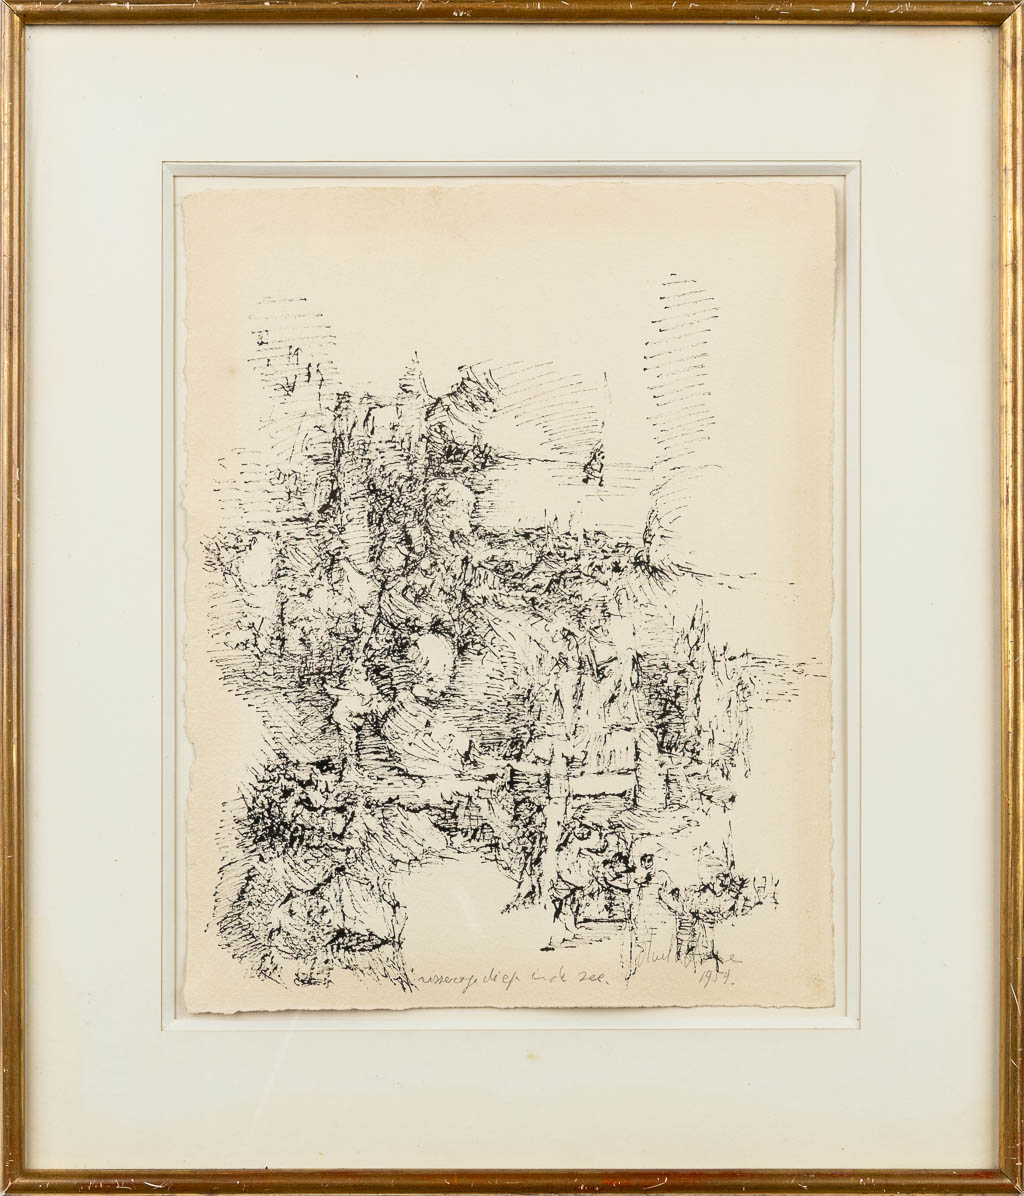 Roel D'HAESE (1921-1996) 'Vissertje diep in de zee' a drawing on paper, 1959. (25,5 x 32 cm)